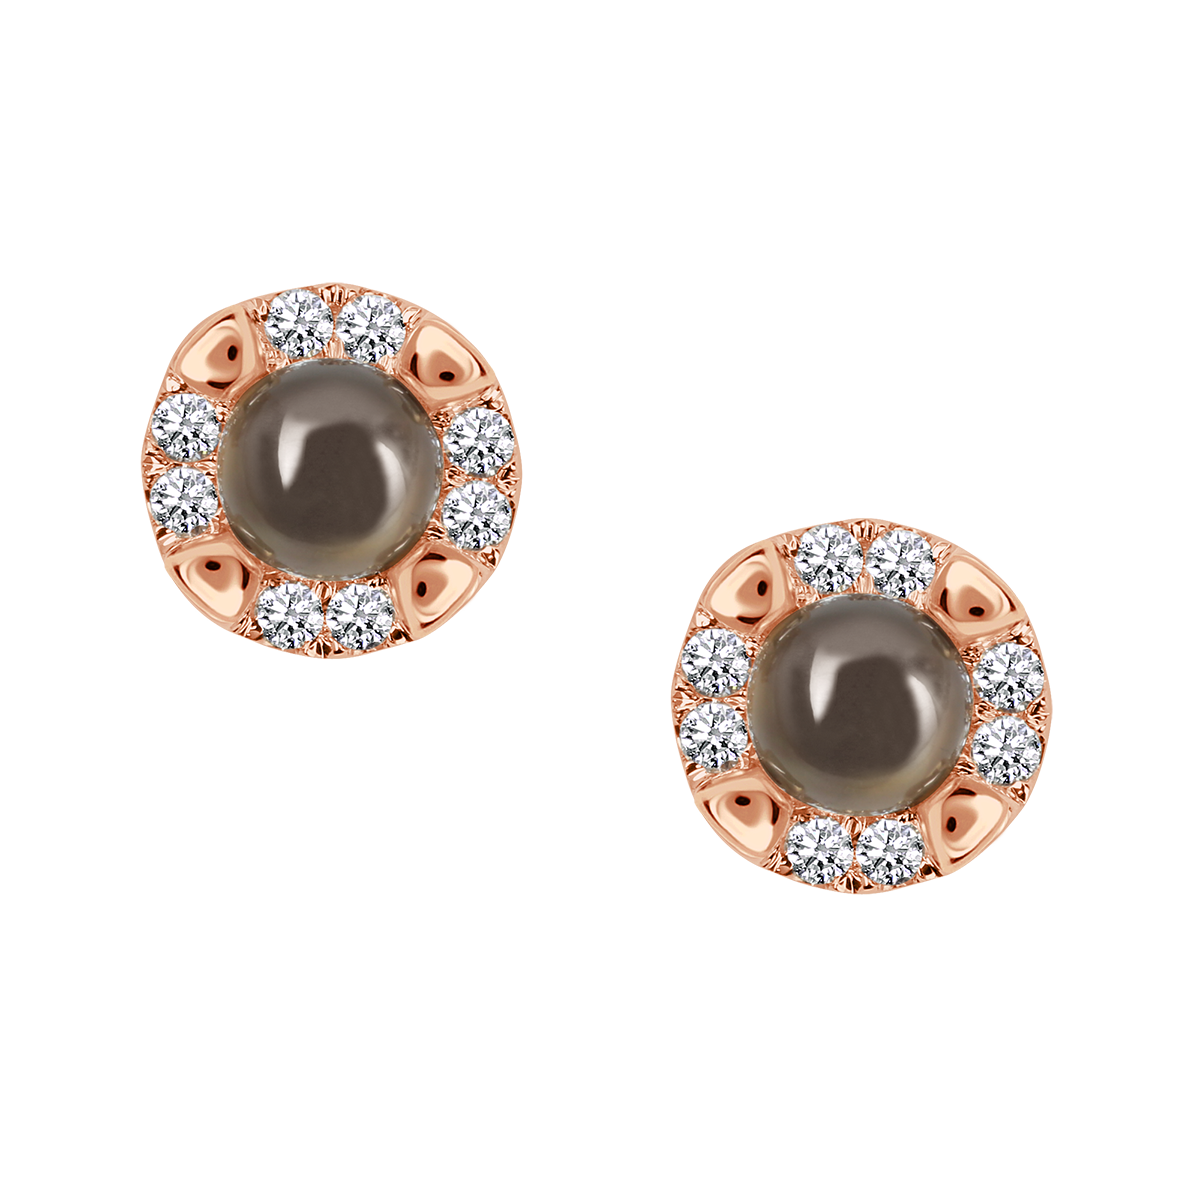 Orchid© Round Cabochon Gemstone & Diamond Halo Earring